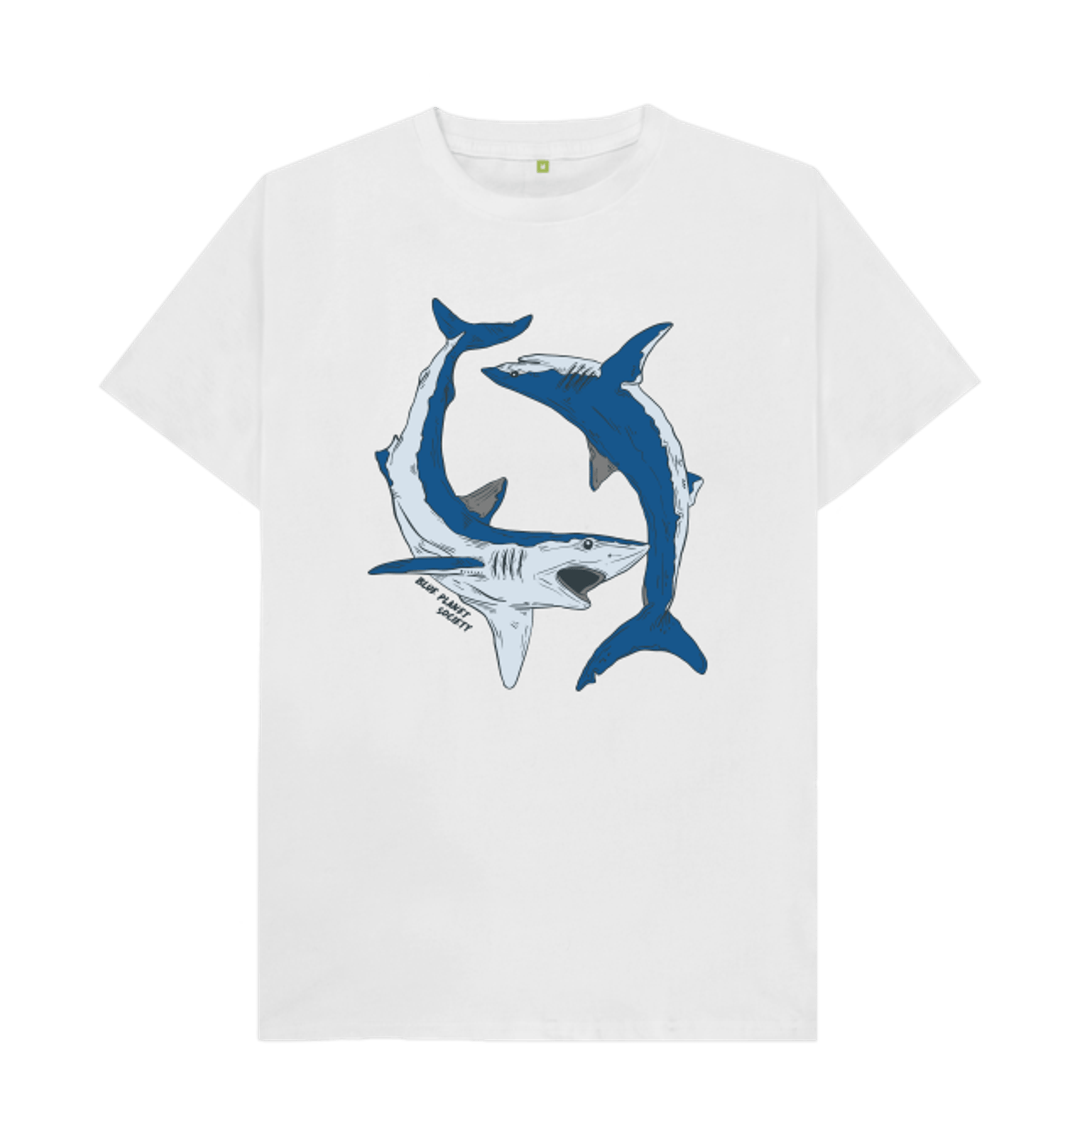 Mako Shark TShirt, Shark Tee Shirt, Men's Fishing Shirt, Fishing